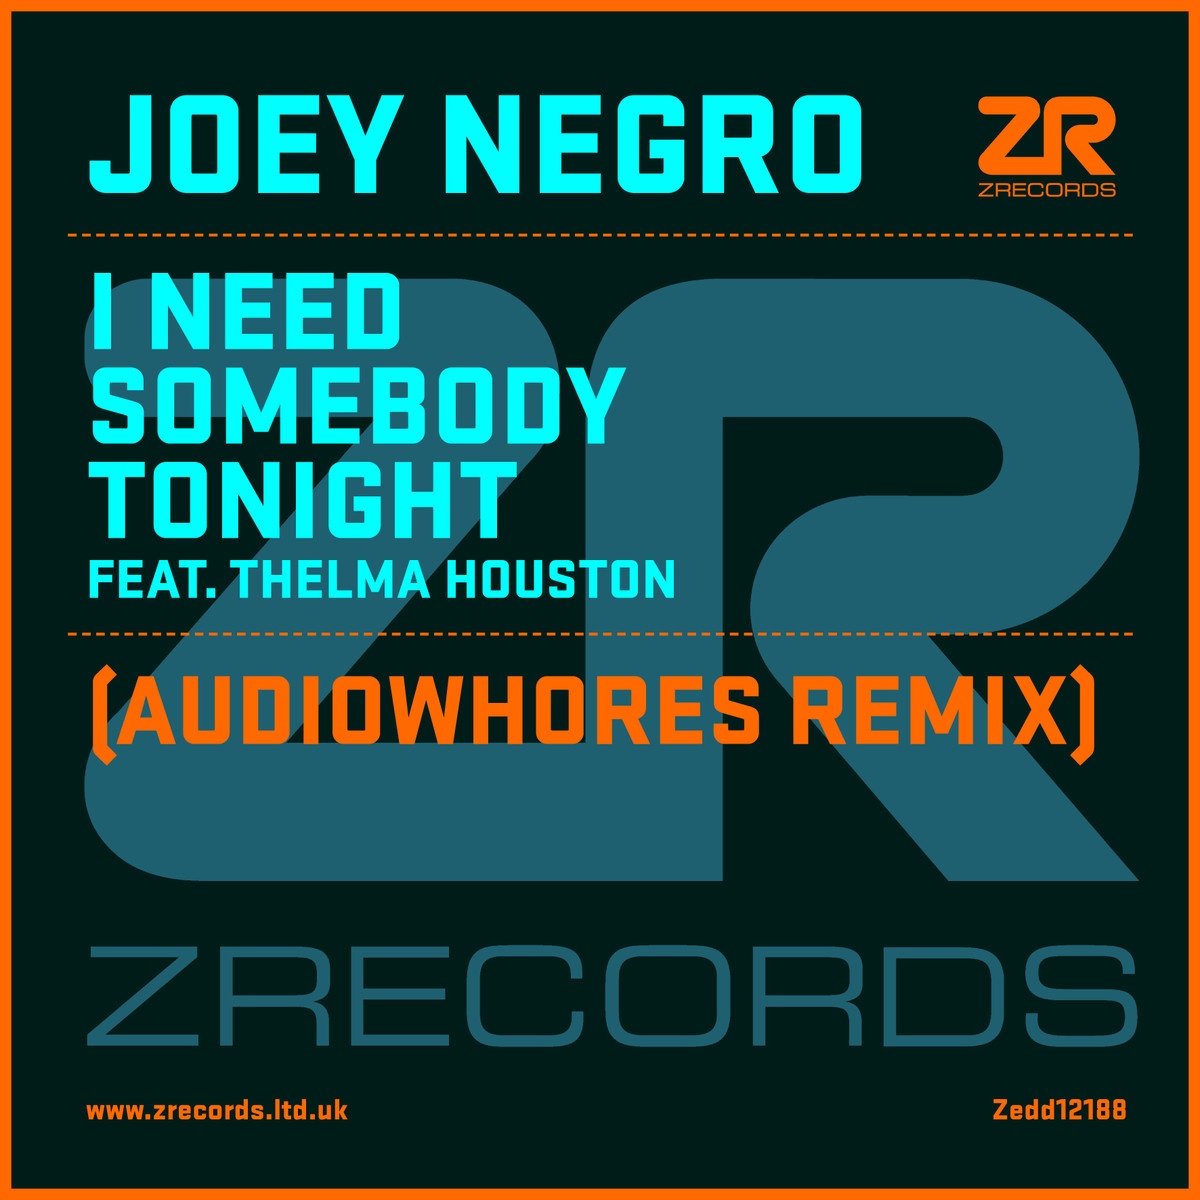 I Need Somebody Tonight Feat. Thelma Houston (Audiowhores Remix)